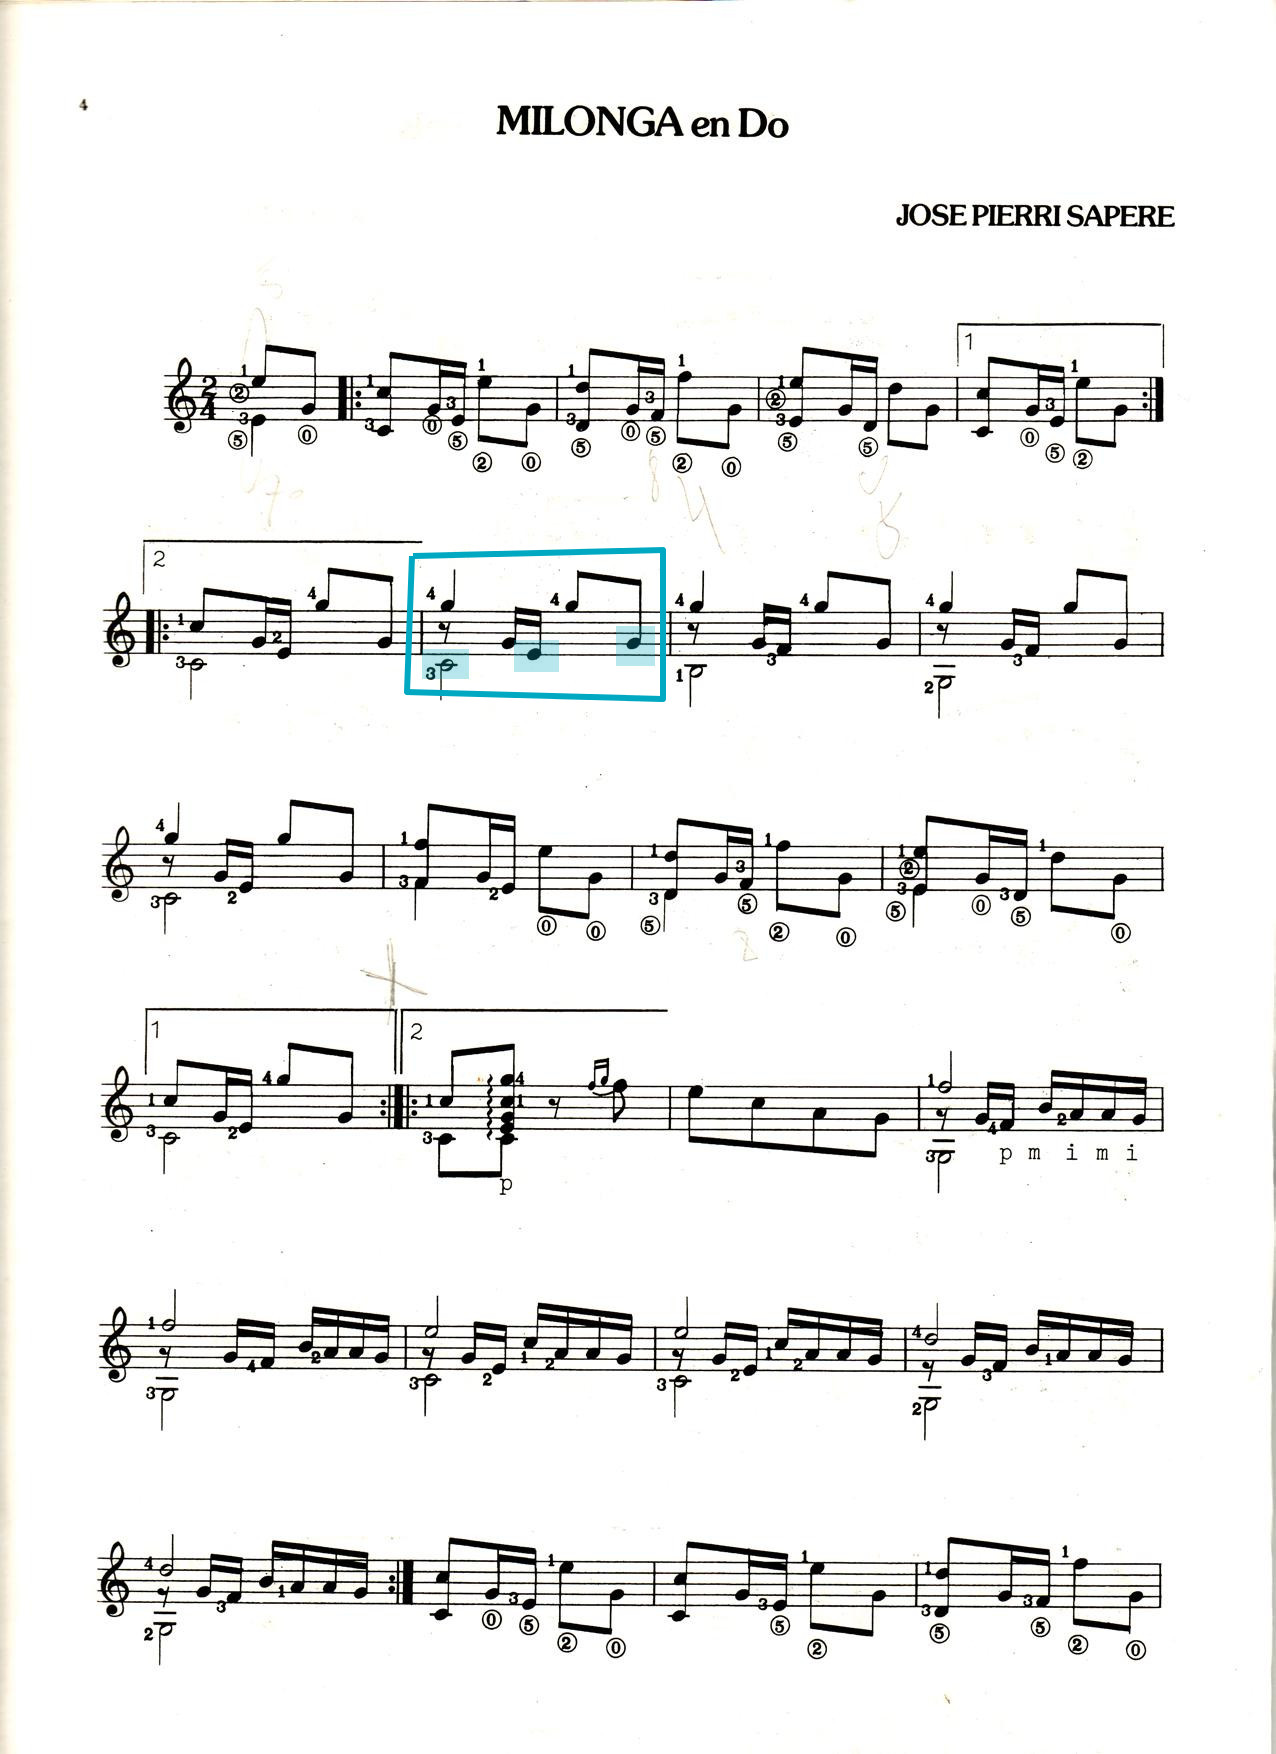 partitura 'Milonga en Do' pagina 1 di José Pierri Sapere